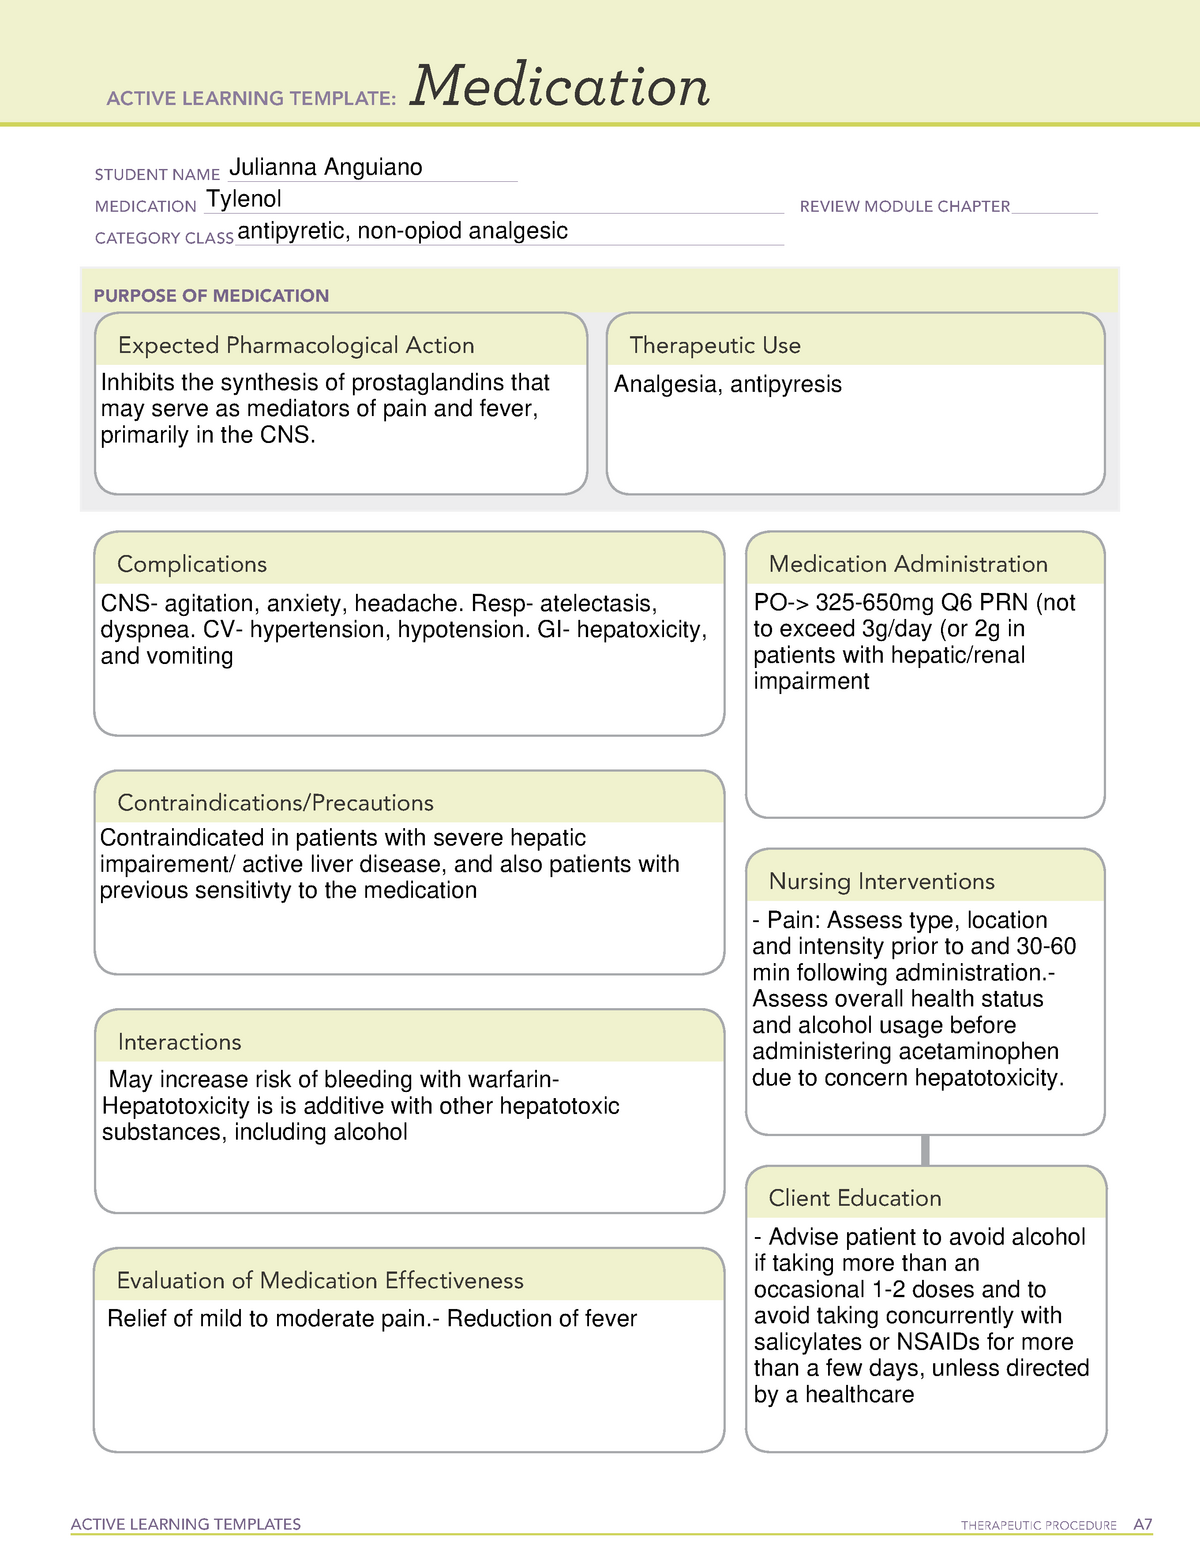 Tylenol medication sheet template ATI ACTIVE LEARNING TEMPLATES